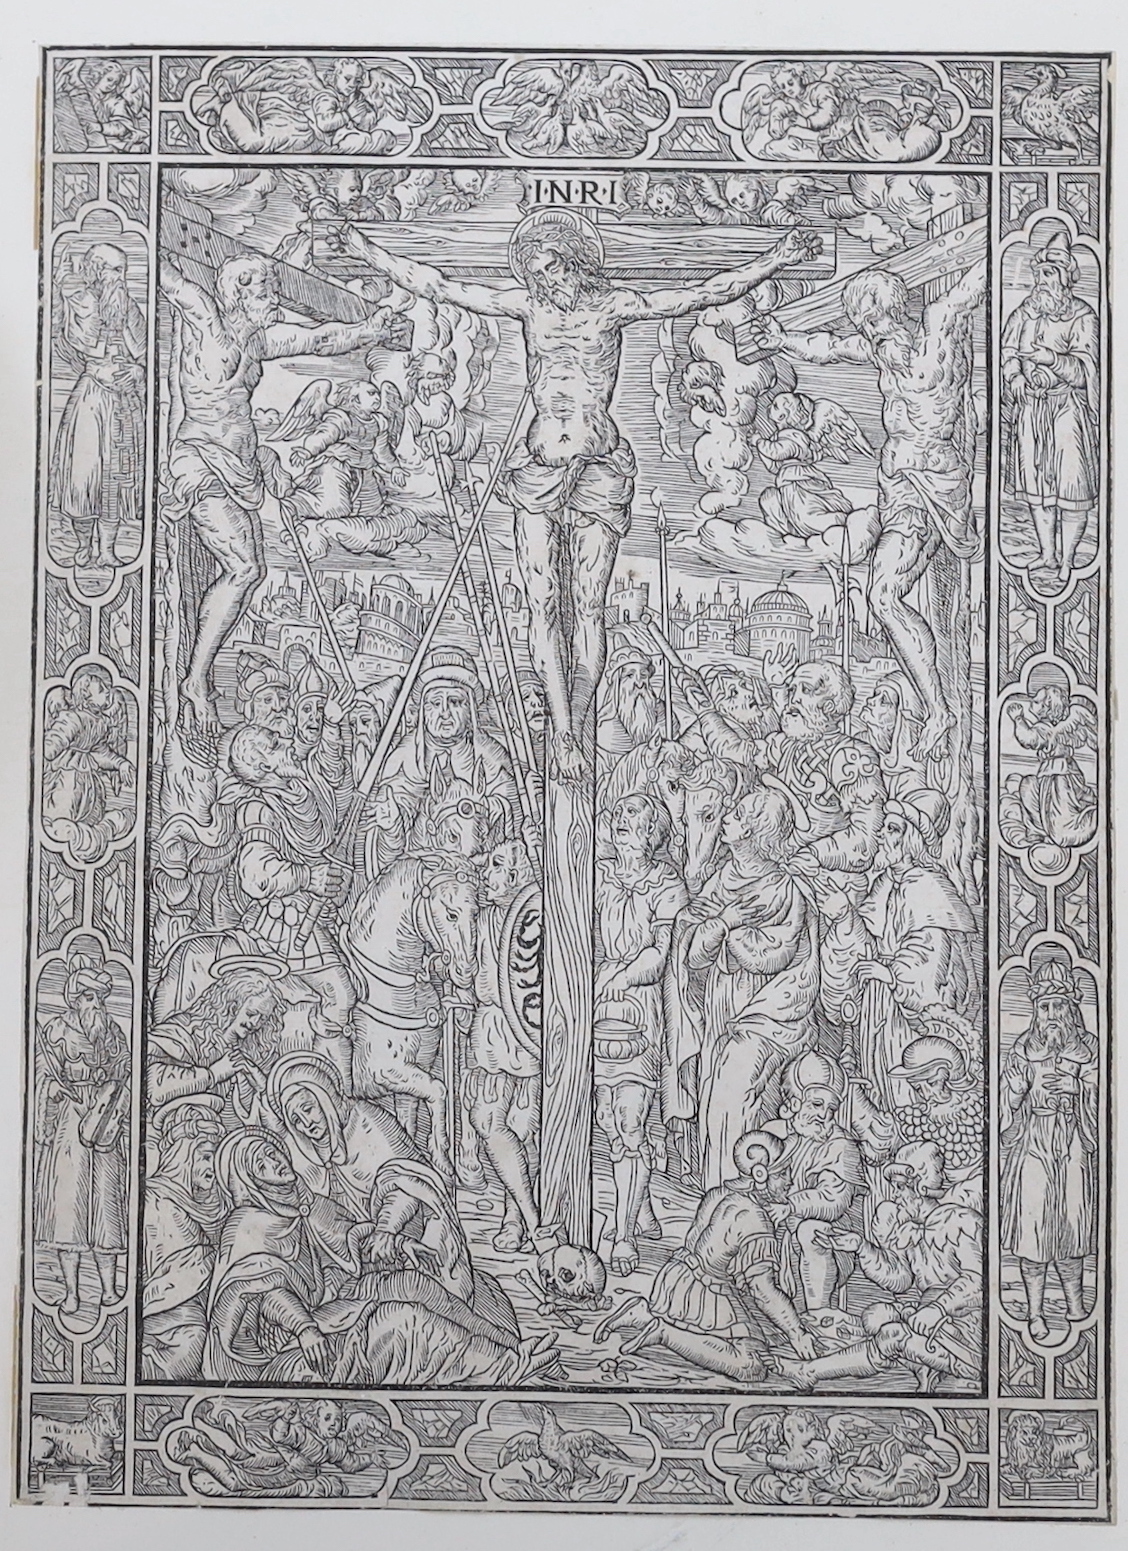 16th century Italian wood engraving, Crucifixion, various inscriptions verso including Office de la Vierge Venice, Marcolini, 1550?, 30cm x 23cm